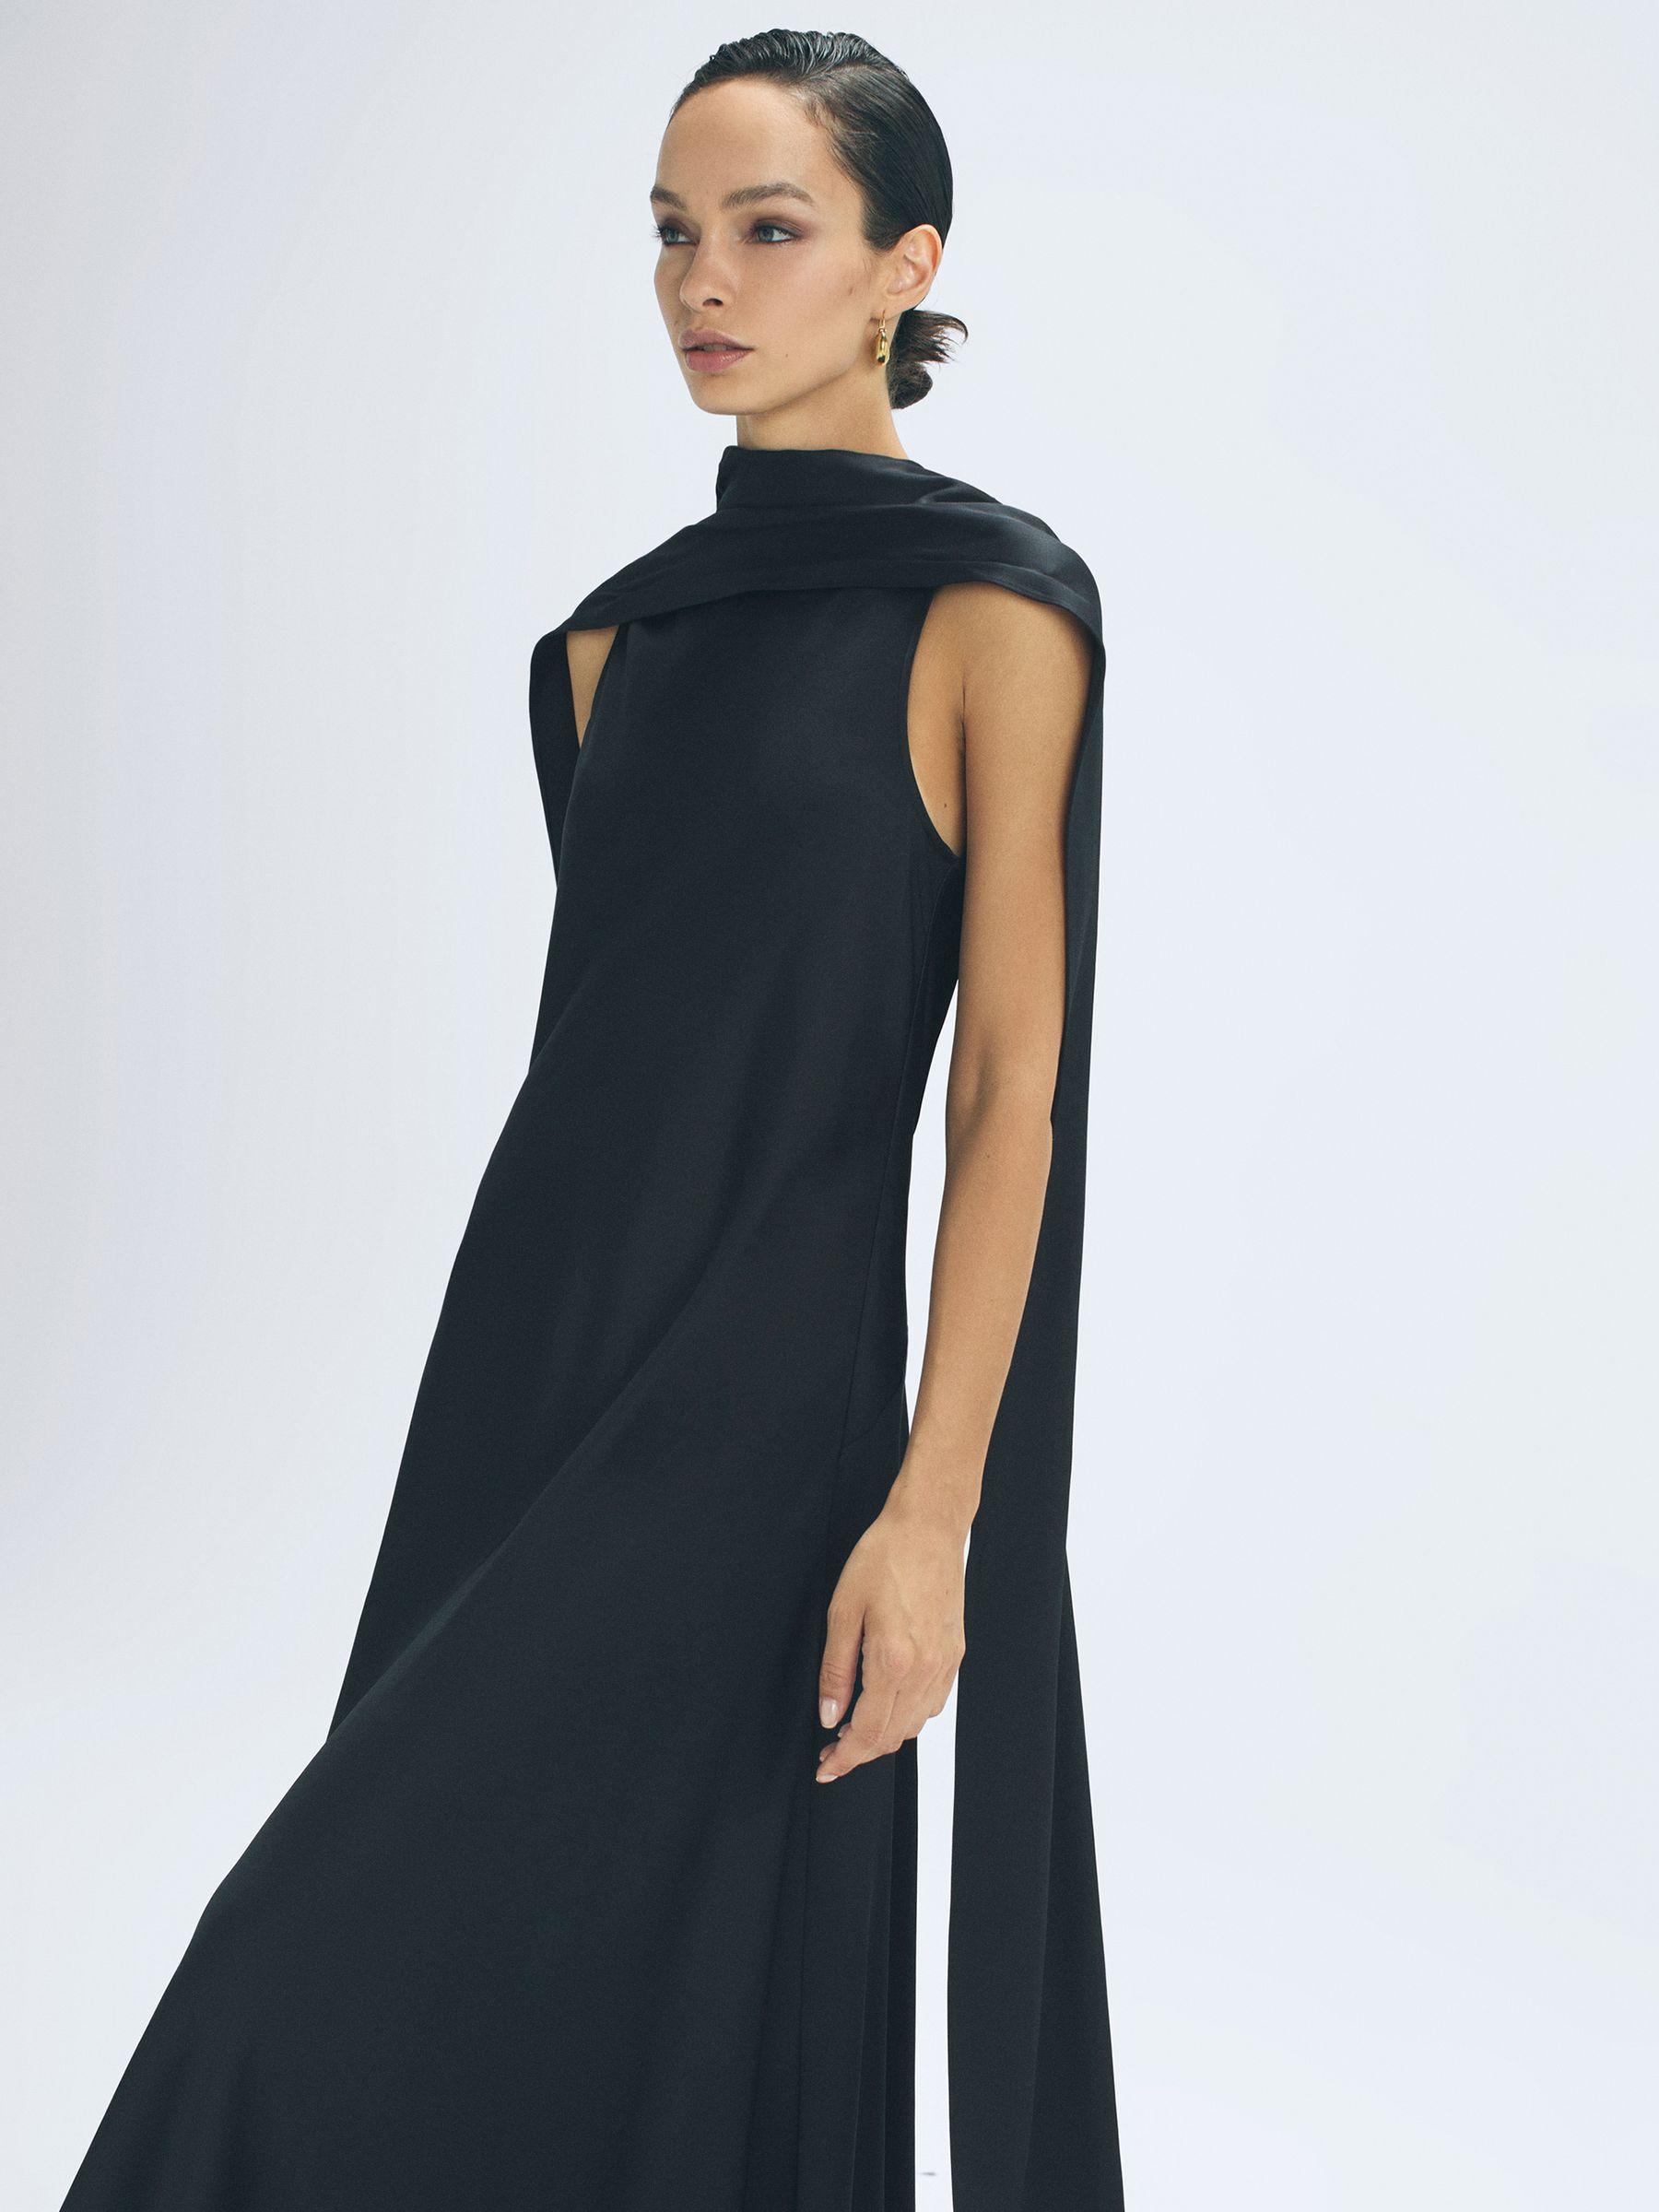 Reiss Keira Atelier Duchess Satin Cape Maxi Dress | REISS Ireland